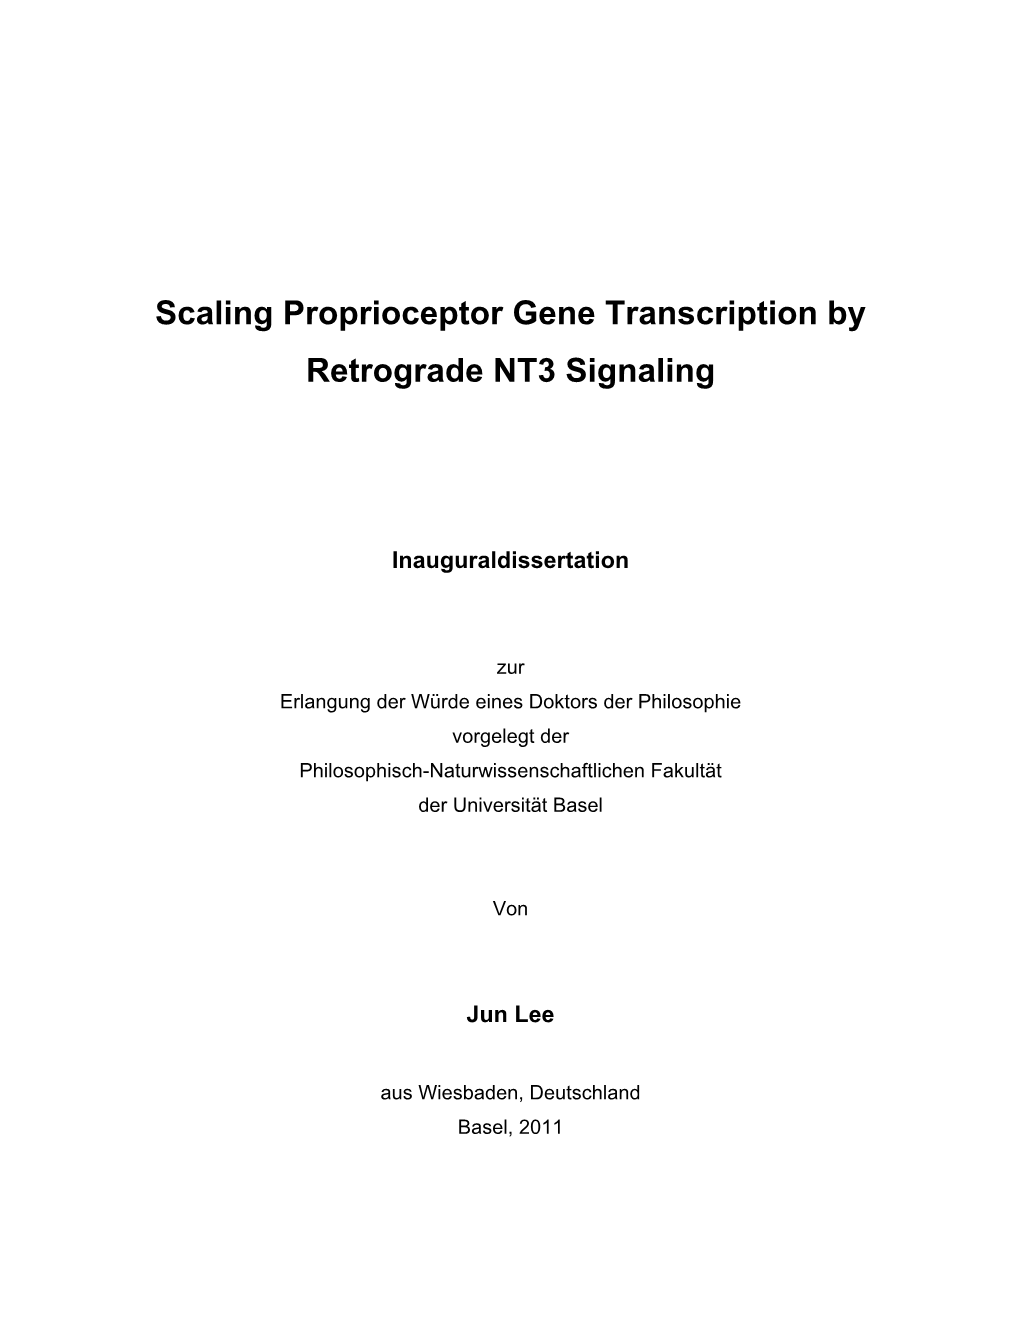 Scaling Proprioceptor Gene Transcription by Retrograde NT3 Signaling